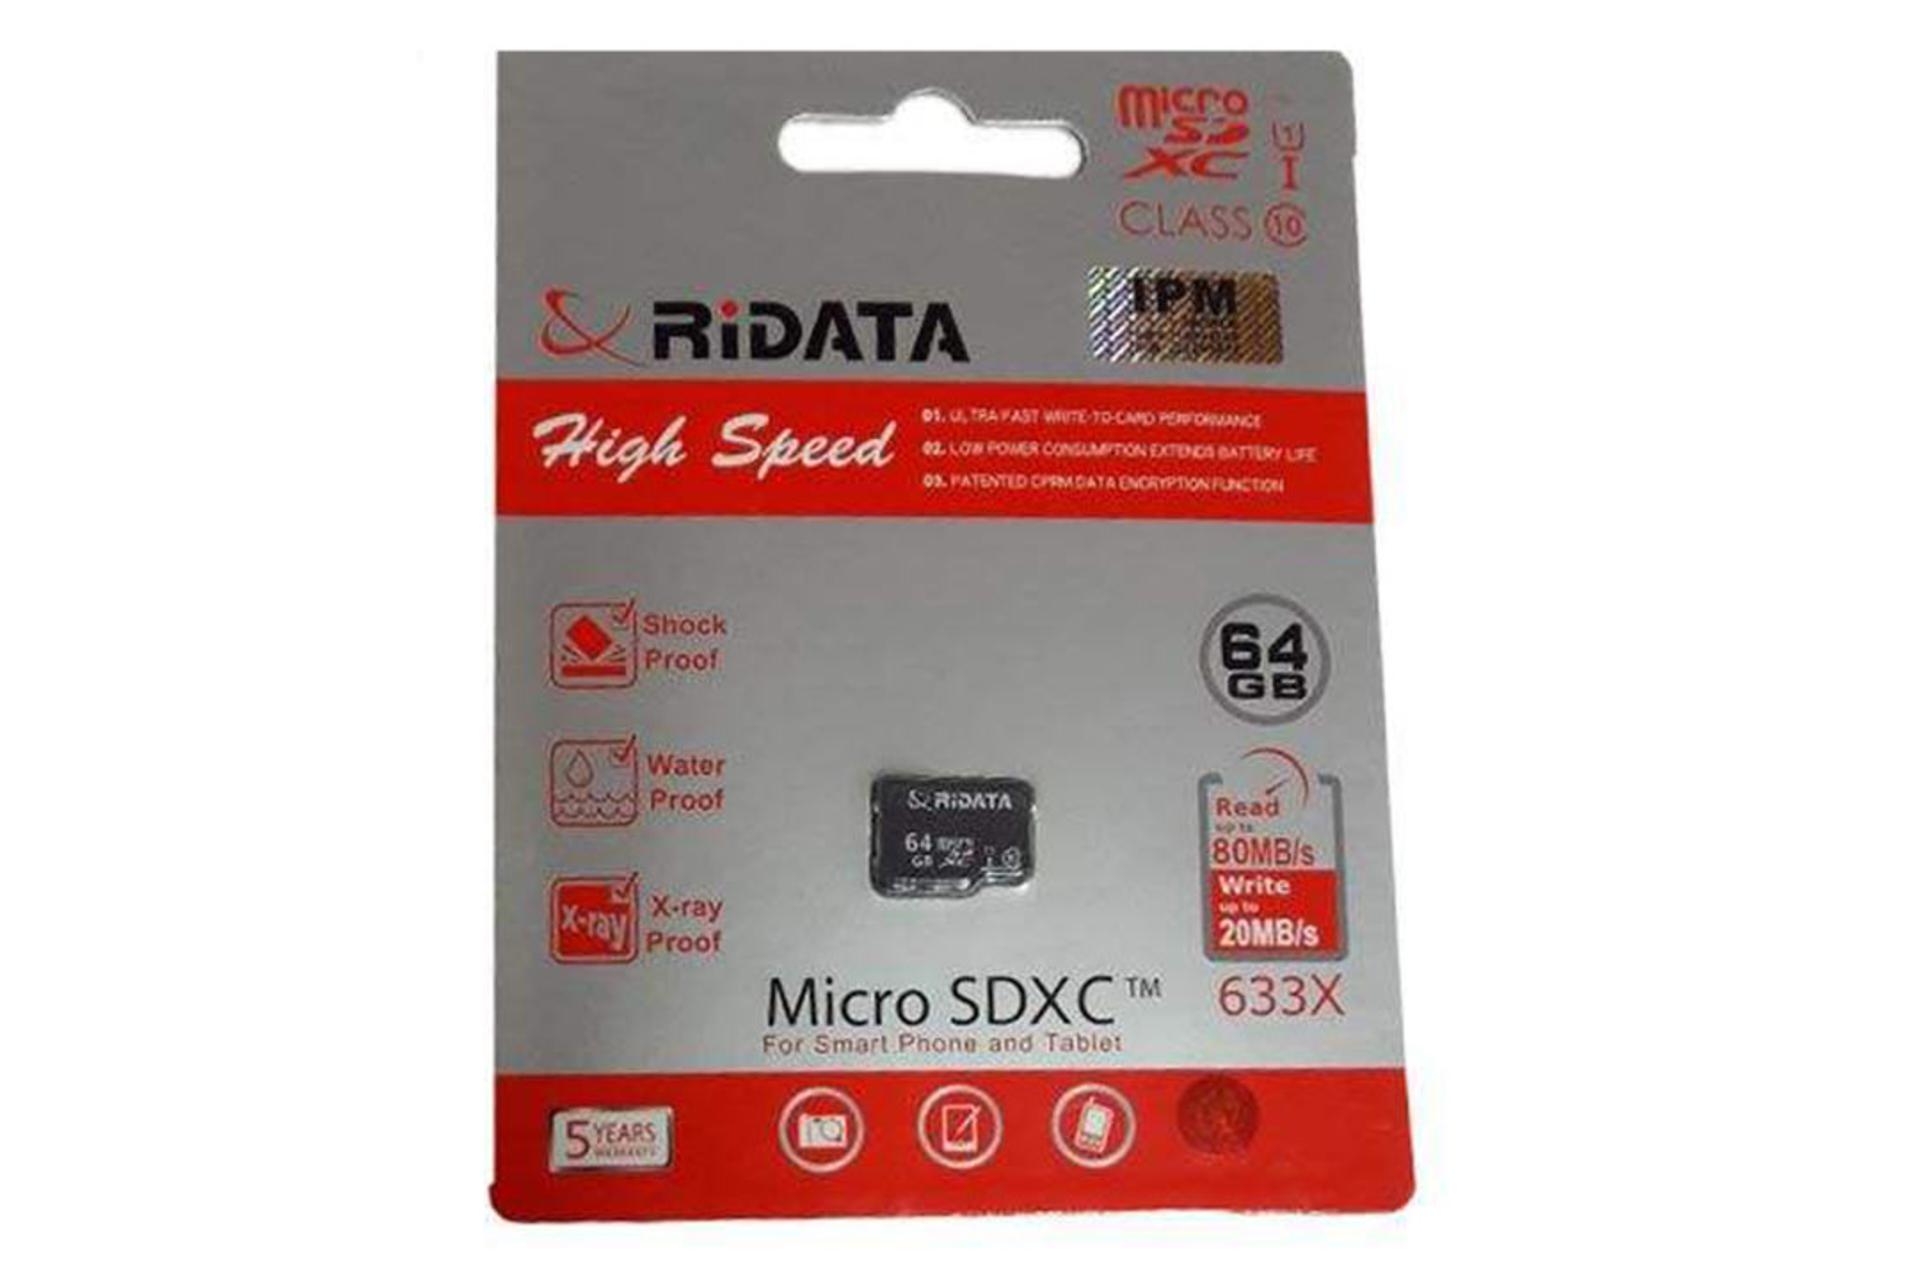 RiDATA High Speed microSDXC Class 10 UHS-I U1 64GB